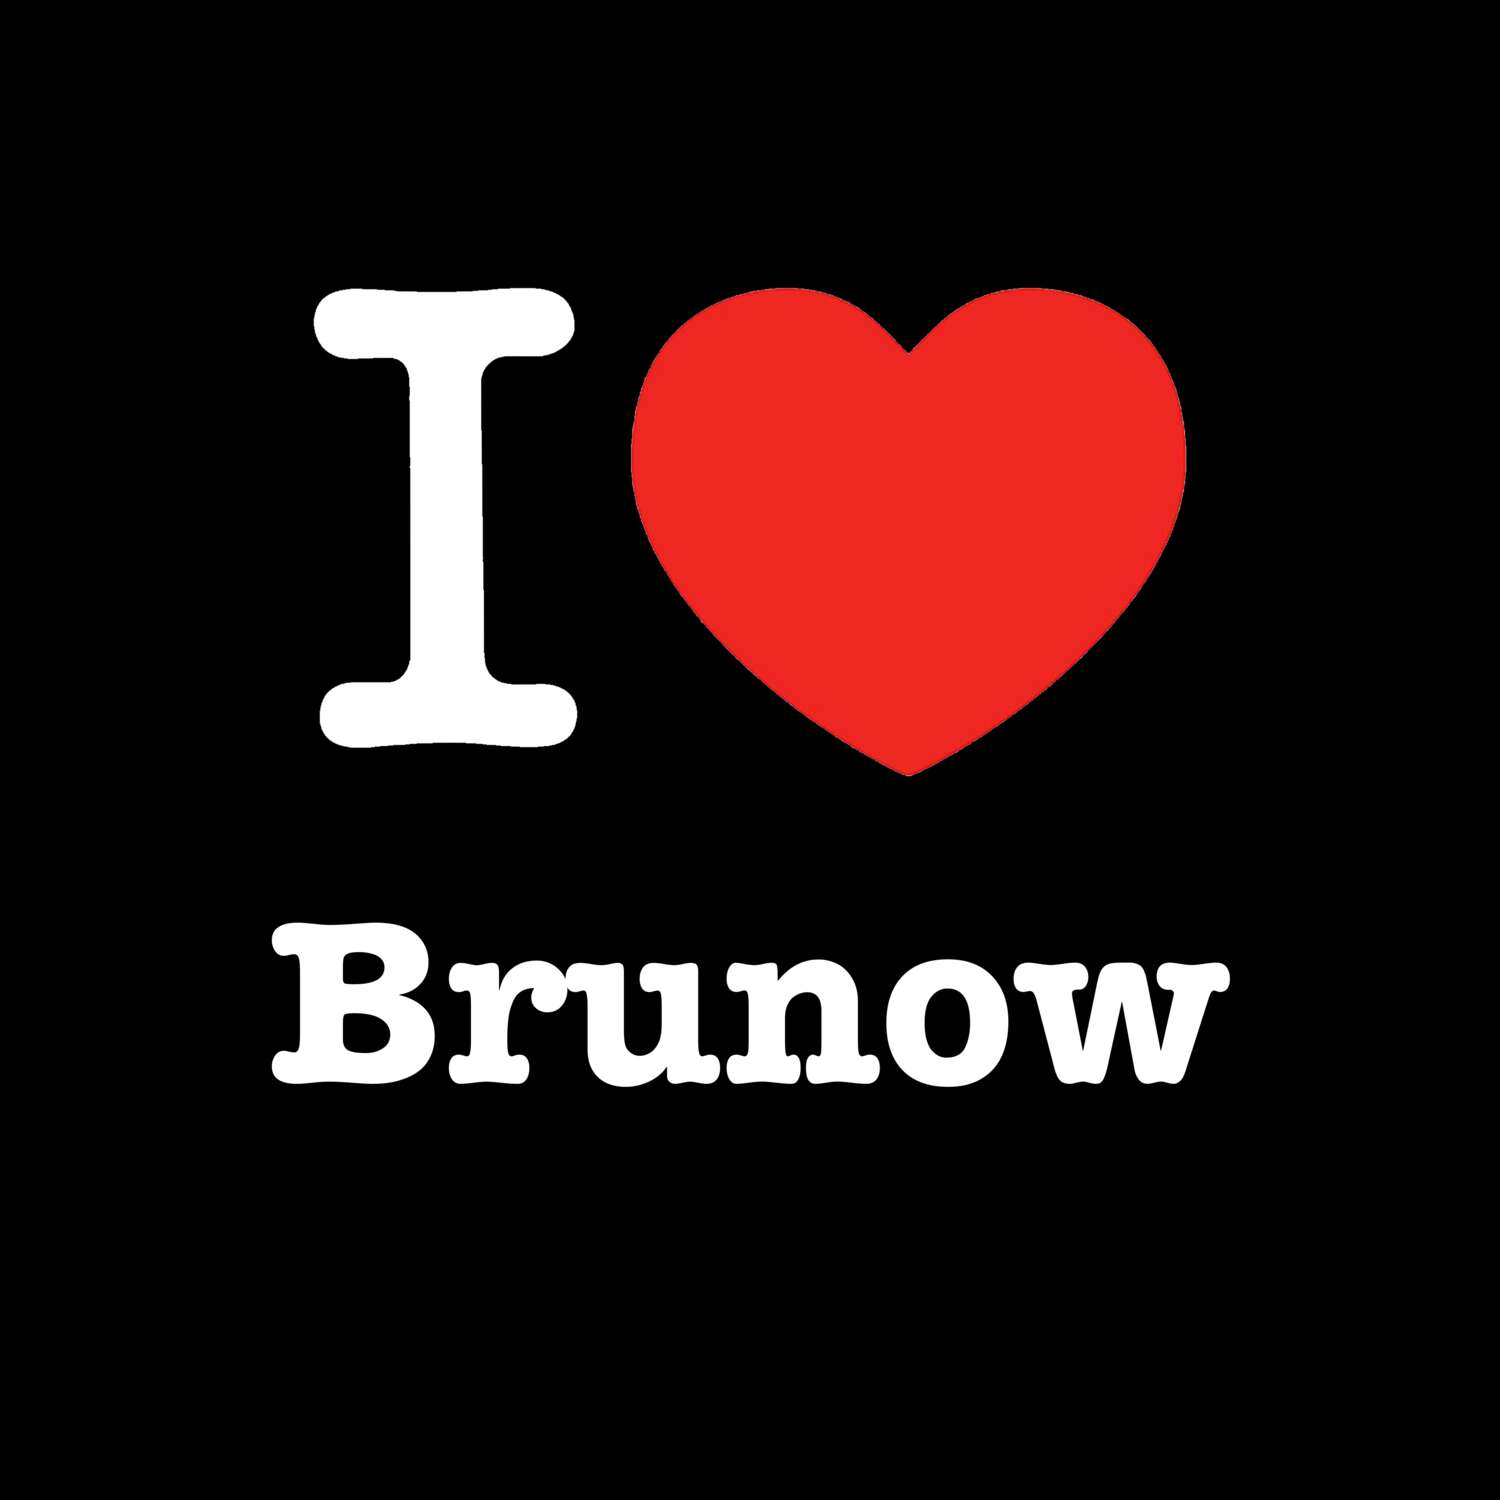 Brunow T-Shirt »I love«